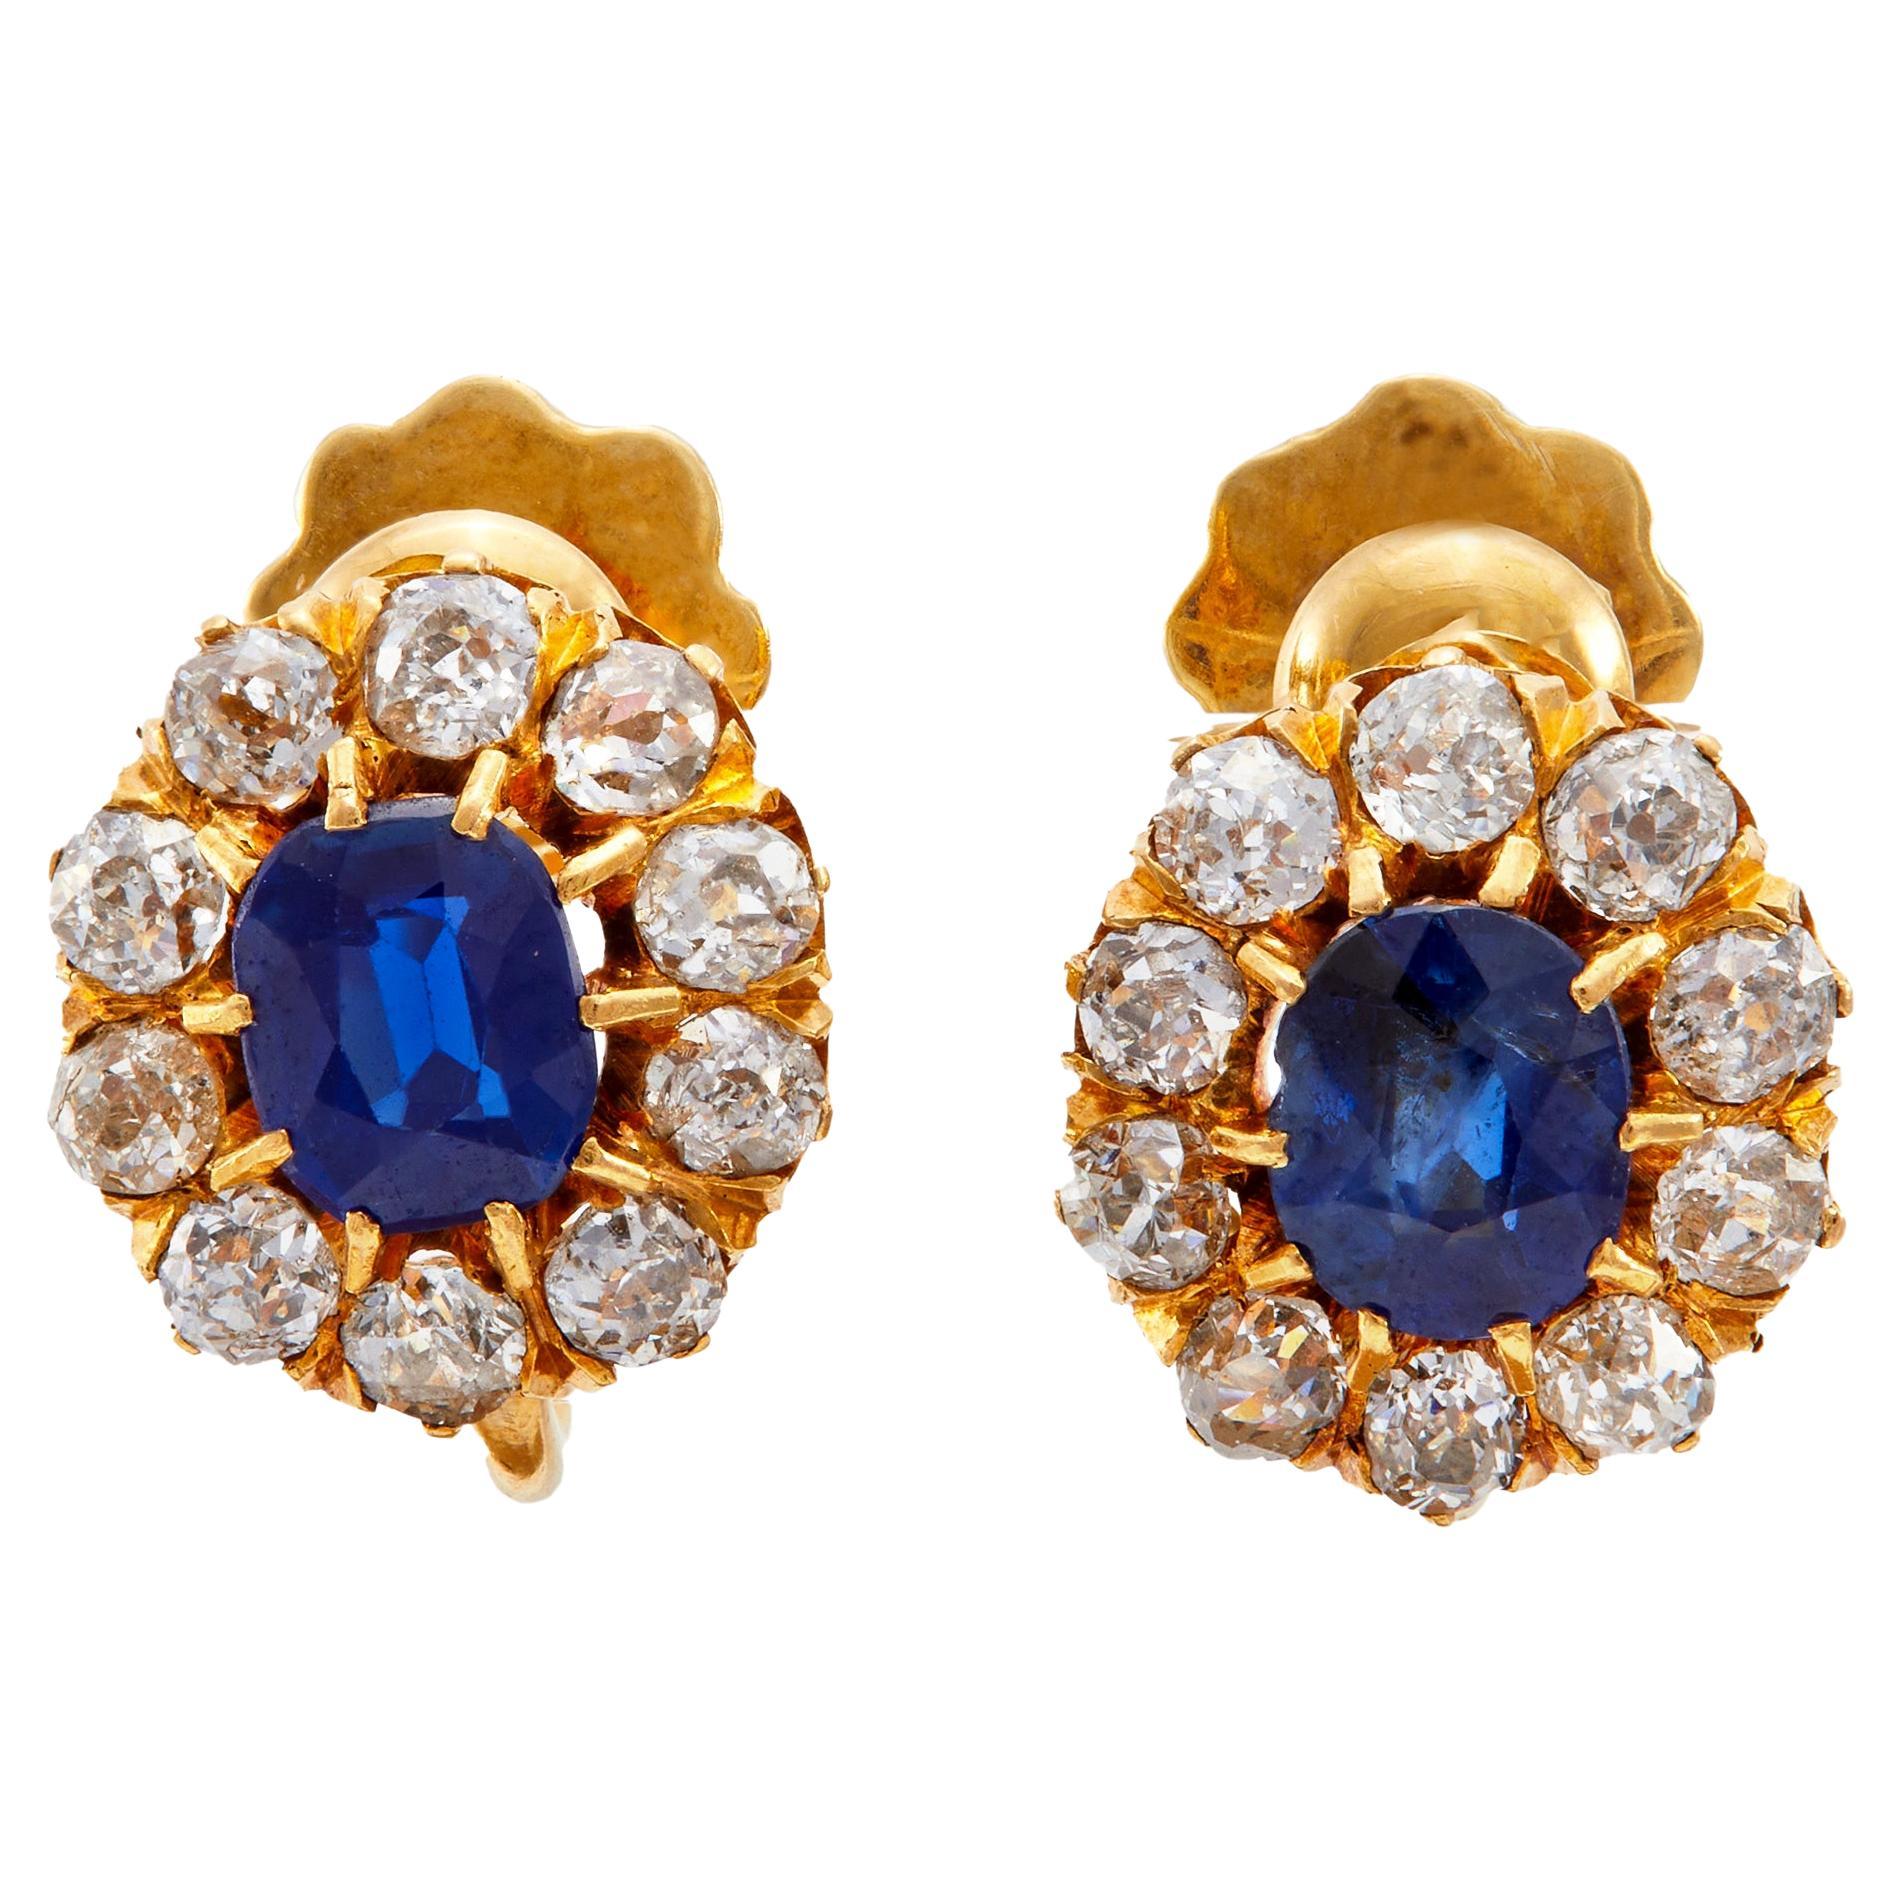 Pair of Edwardian Sapphire Diamond 18K Yellow Gold Cluster Earrings